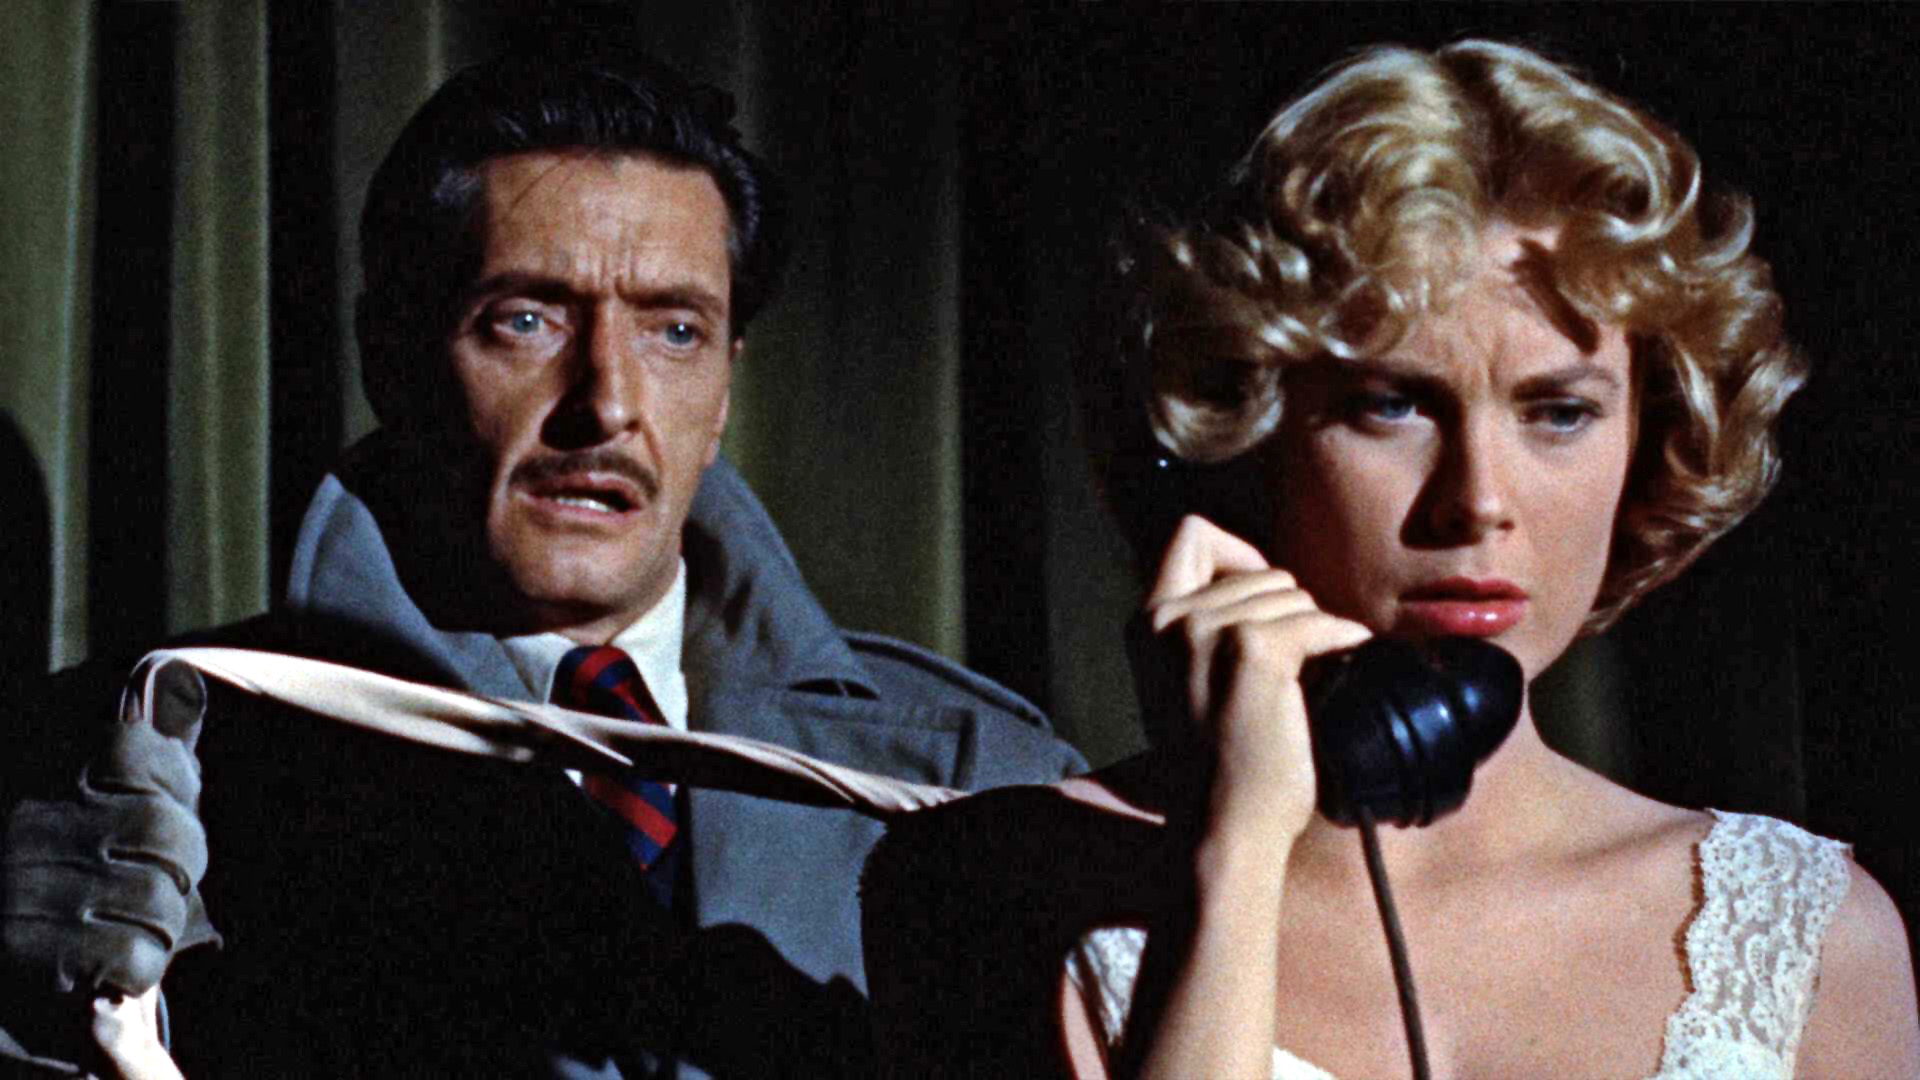 Dial M for Murder / Dial M for Murder (1954)